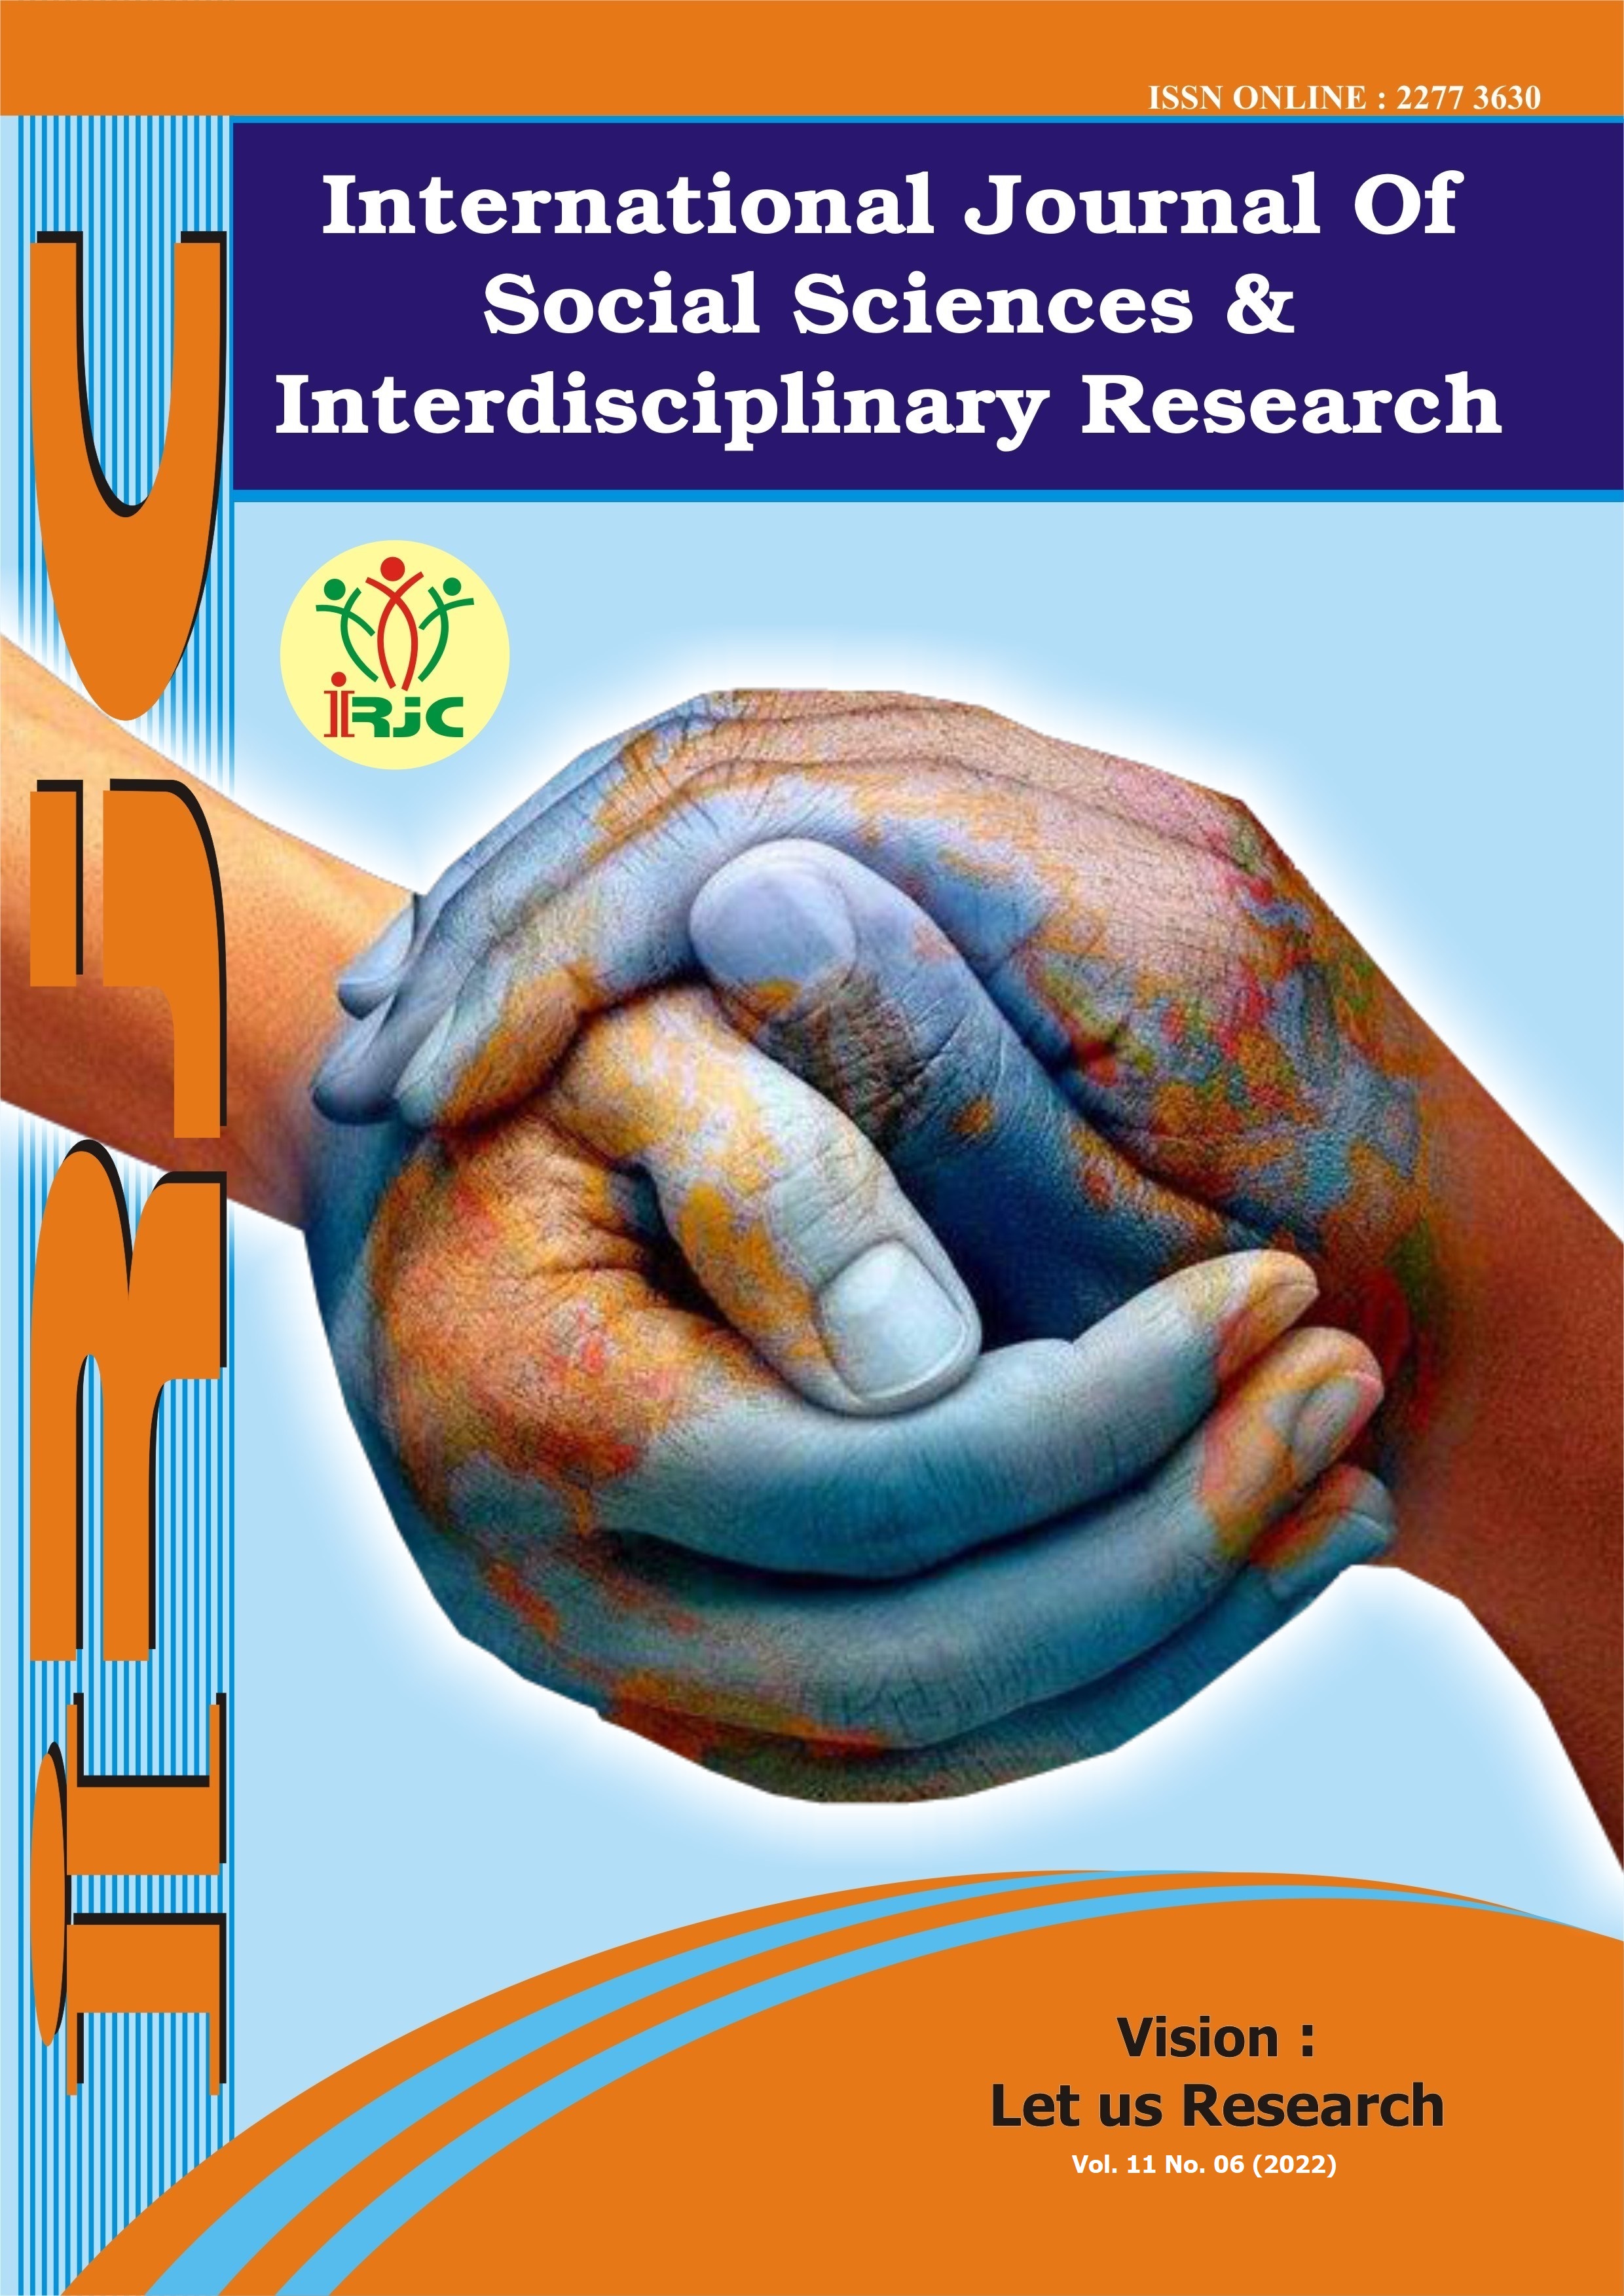 					View Vol. 11 No. 06 (2022): INTERNATIONAL JOURNAL OF SOCIAL SCIENCE & INTERDISCIPLINARY RESEARCH
				